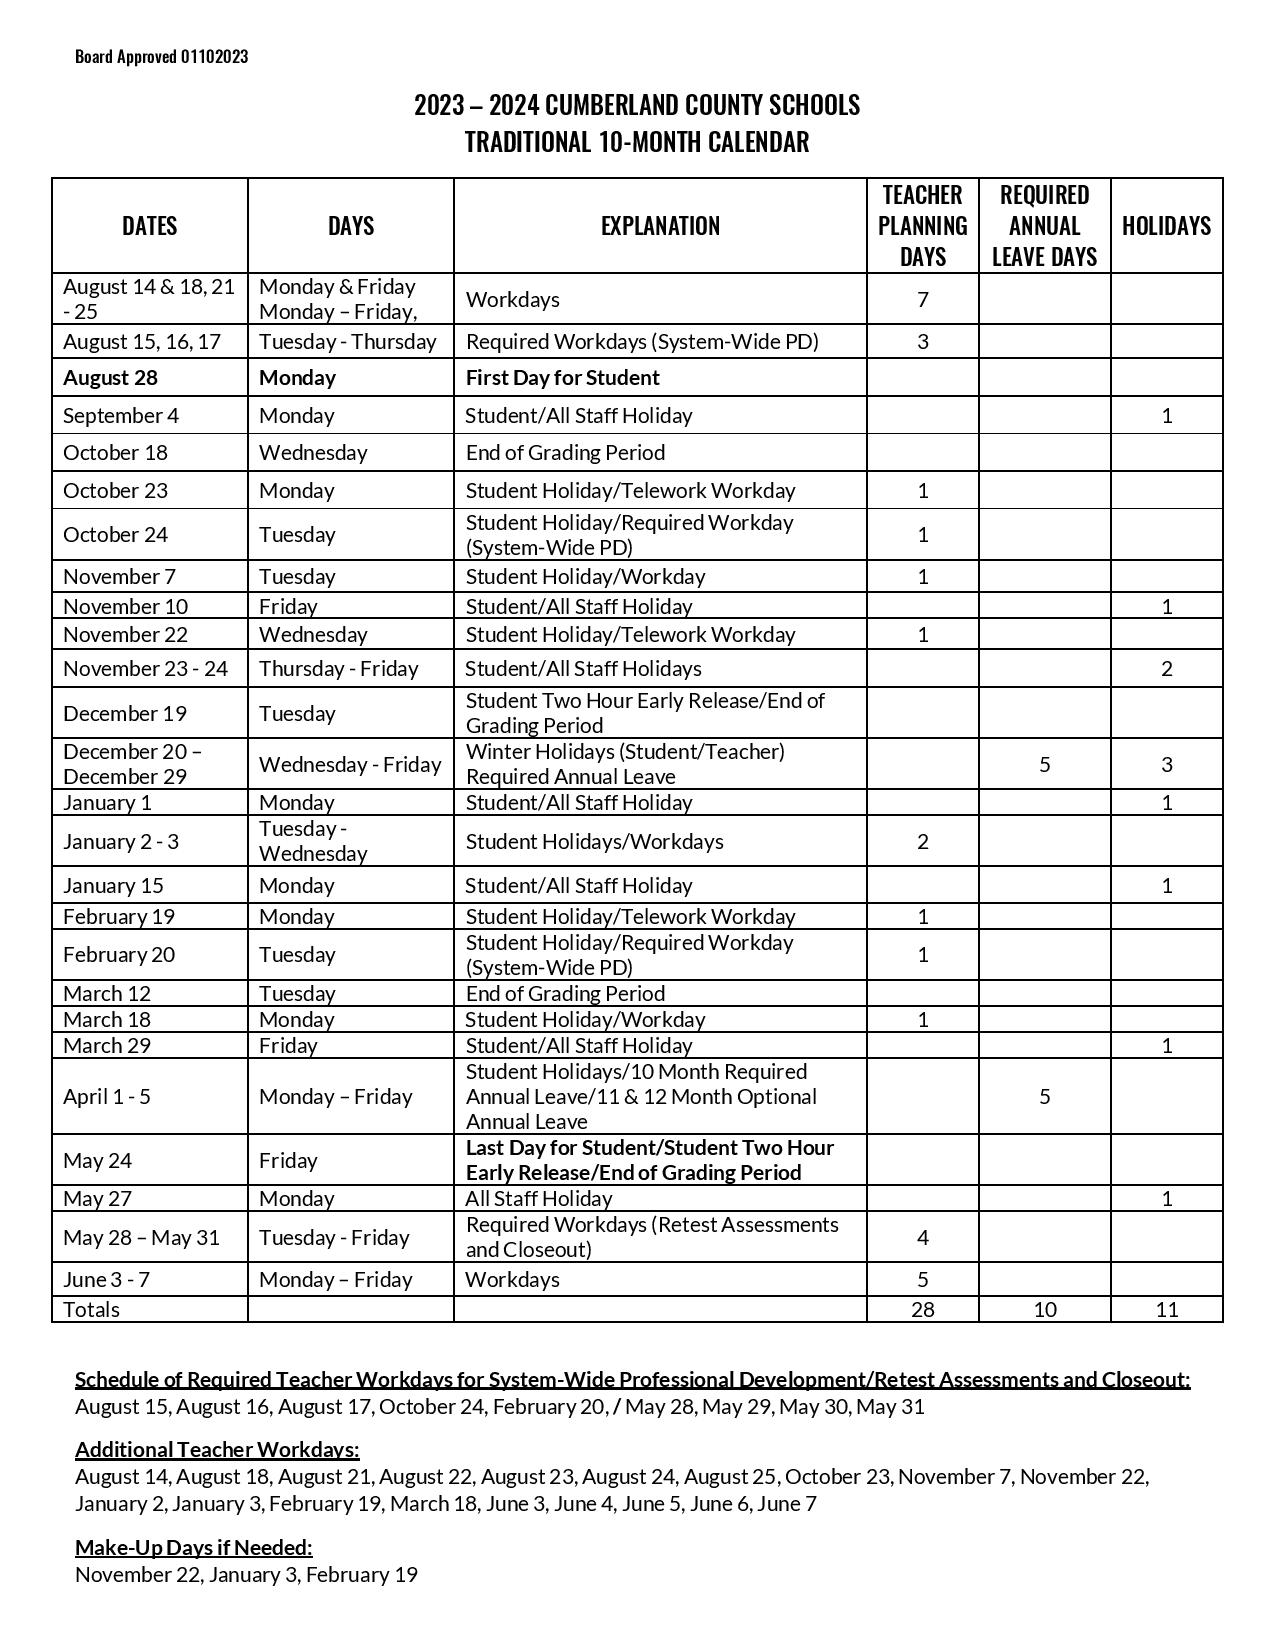 Cumberland County Schools Calendar Holidays 2023-2024